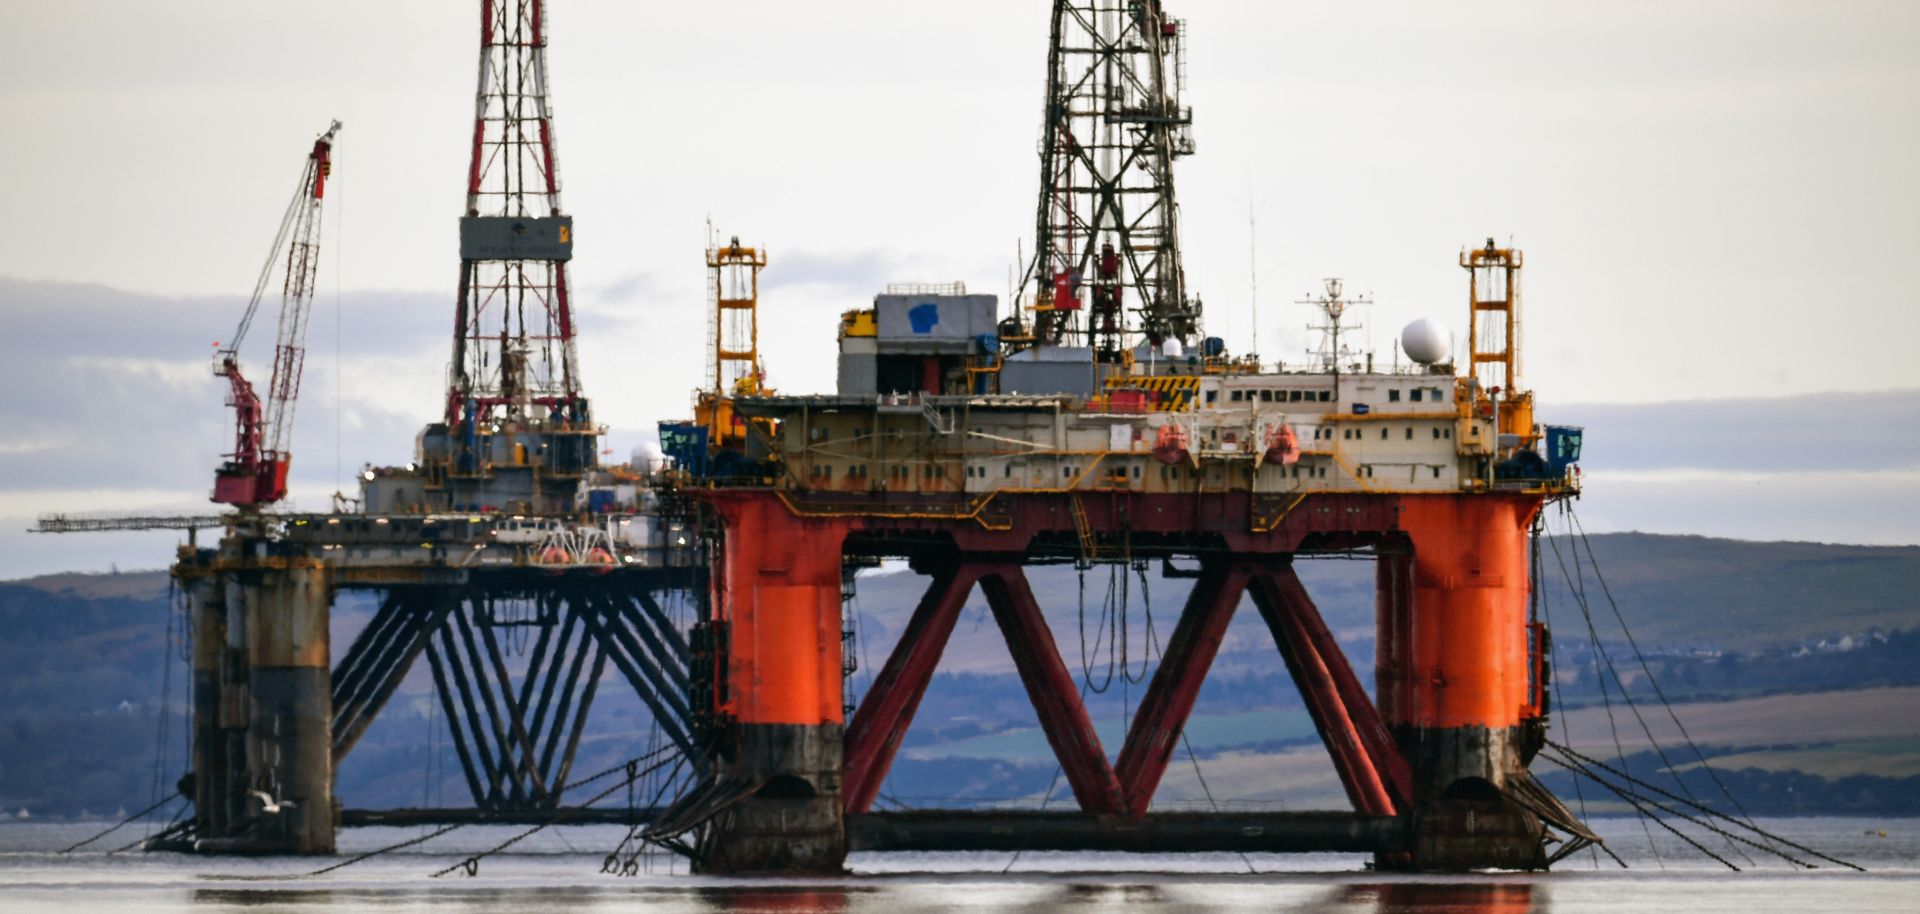 Oil rigs in the Cromarty Firth near Invergordon, Scotland, on Jan. 12, 2018.